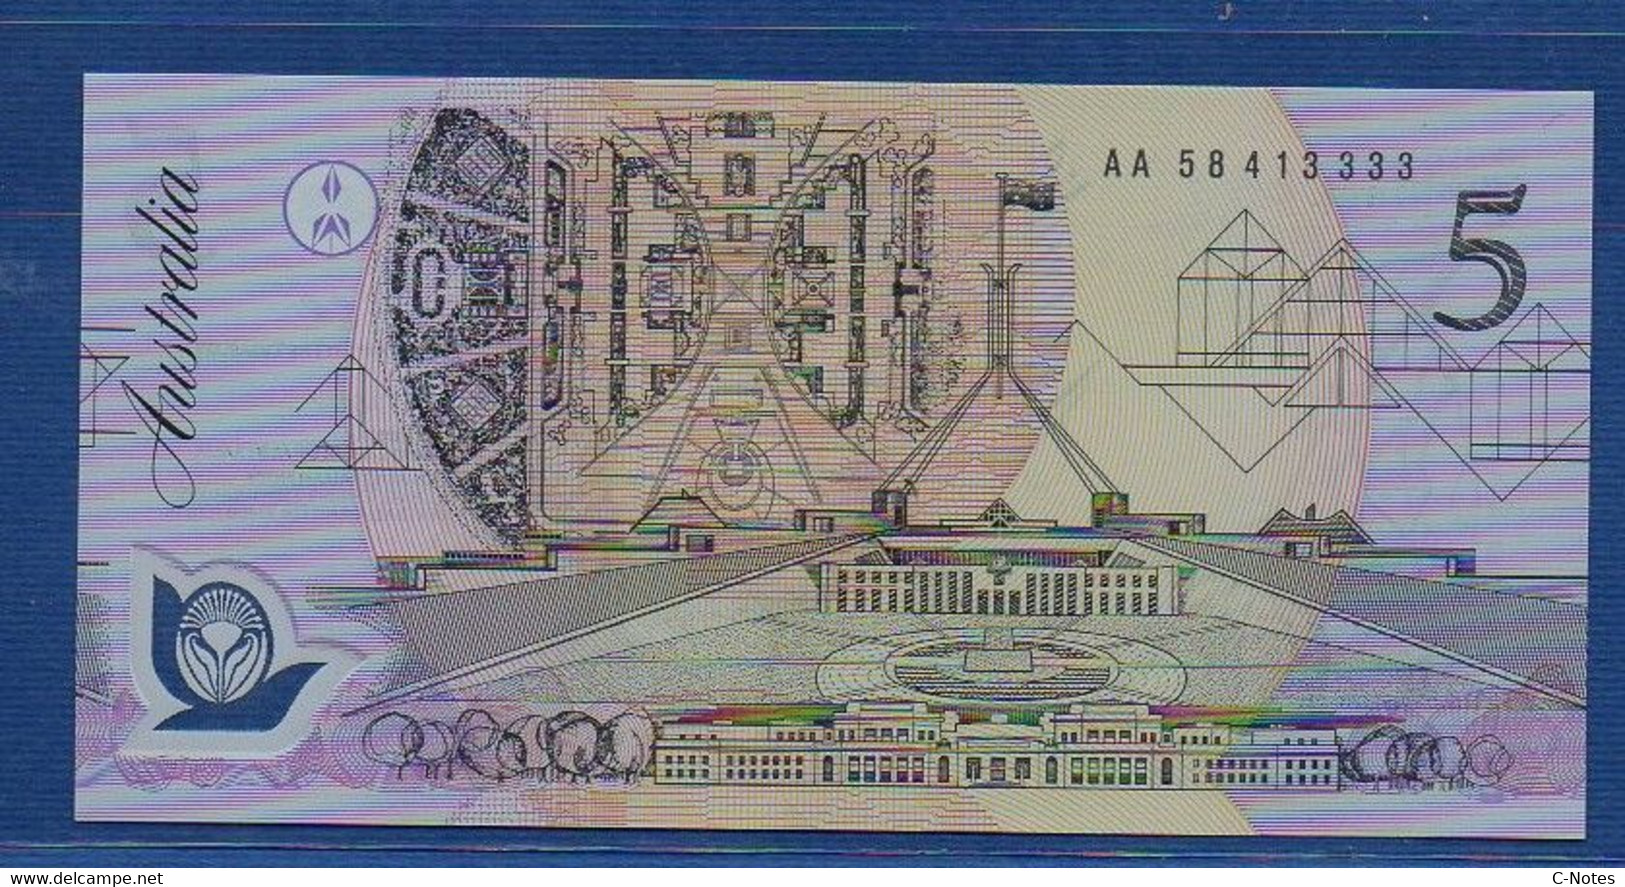 AUSTRALIA - P.50a1 - 5 Dollars 1992 UNC, Serie AA 58 413333 - 1992-2001 (Polymer)